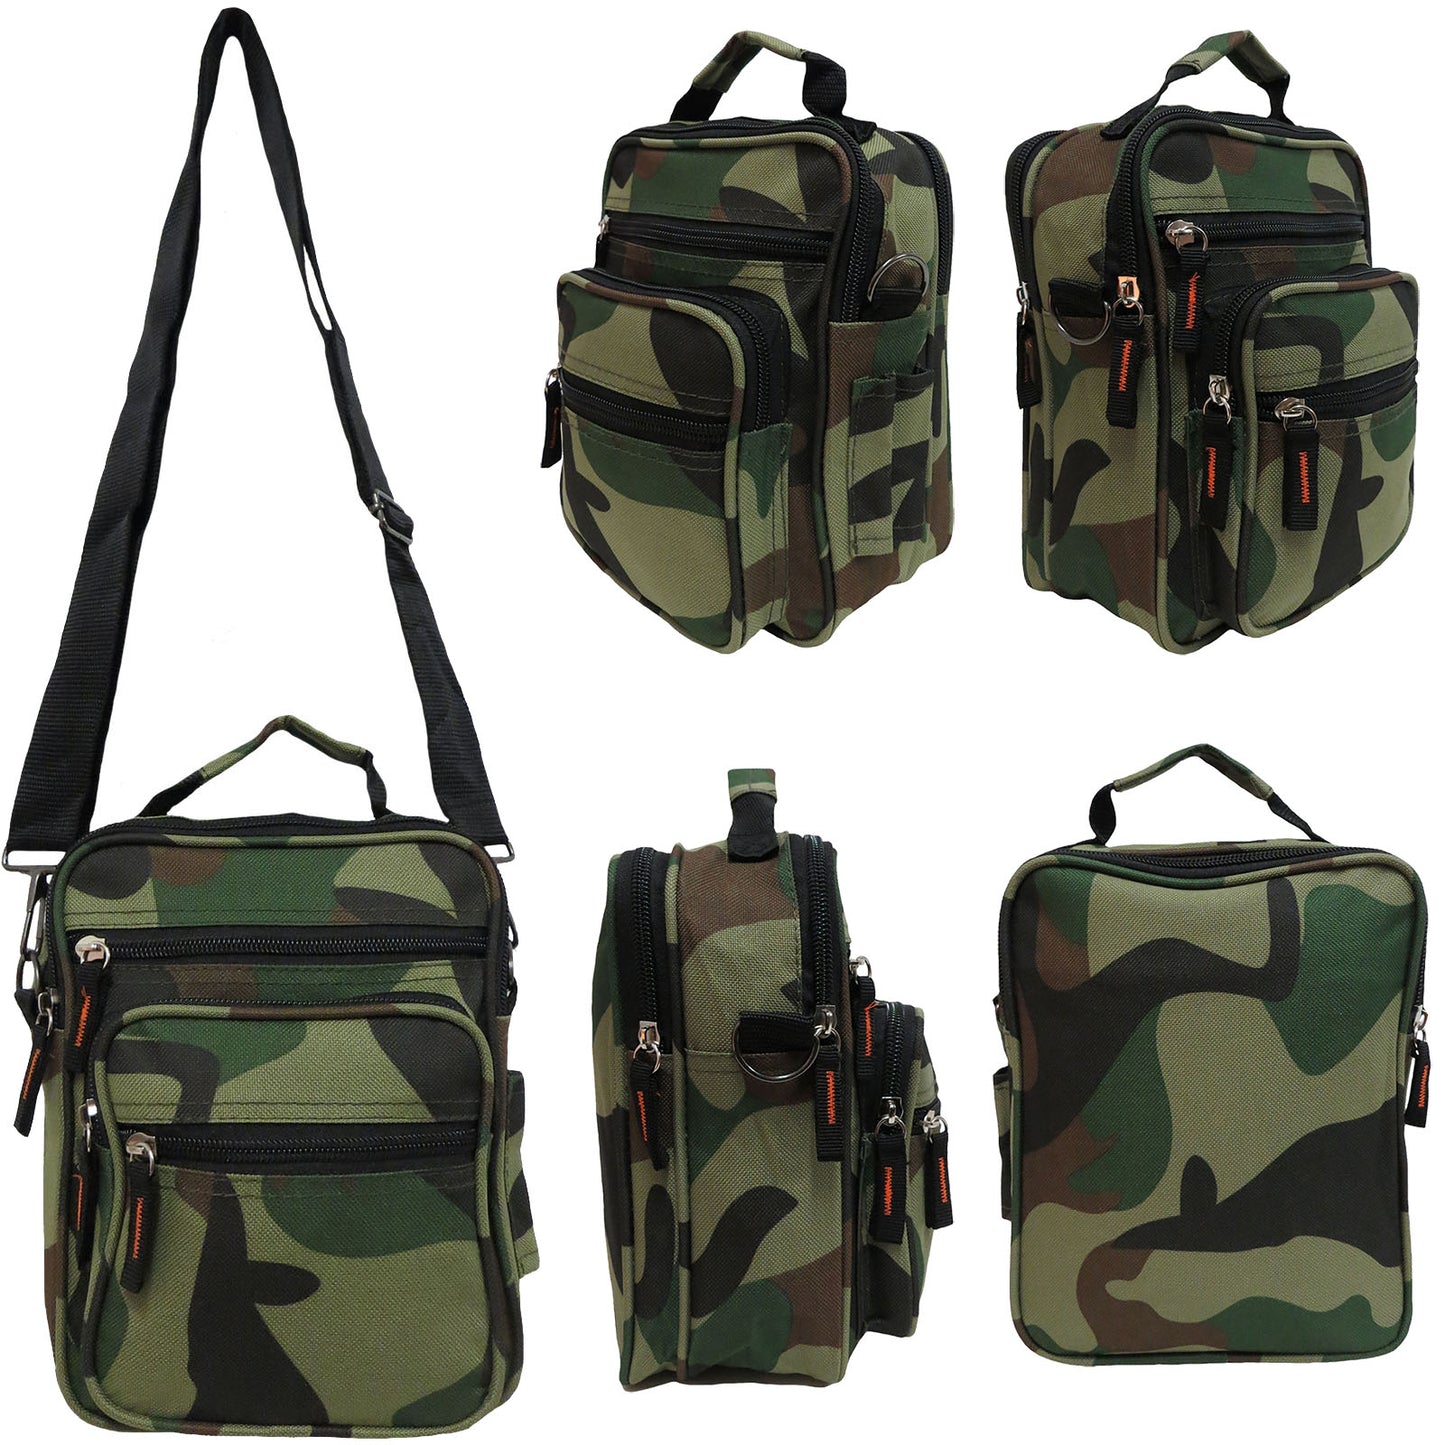 Camouflage messenger bag in a popular camo print design